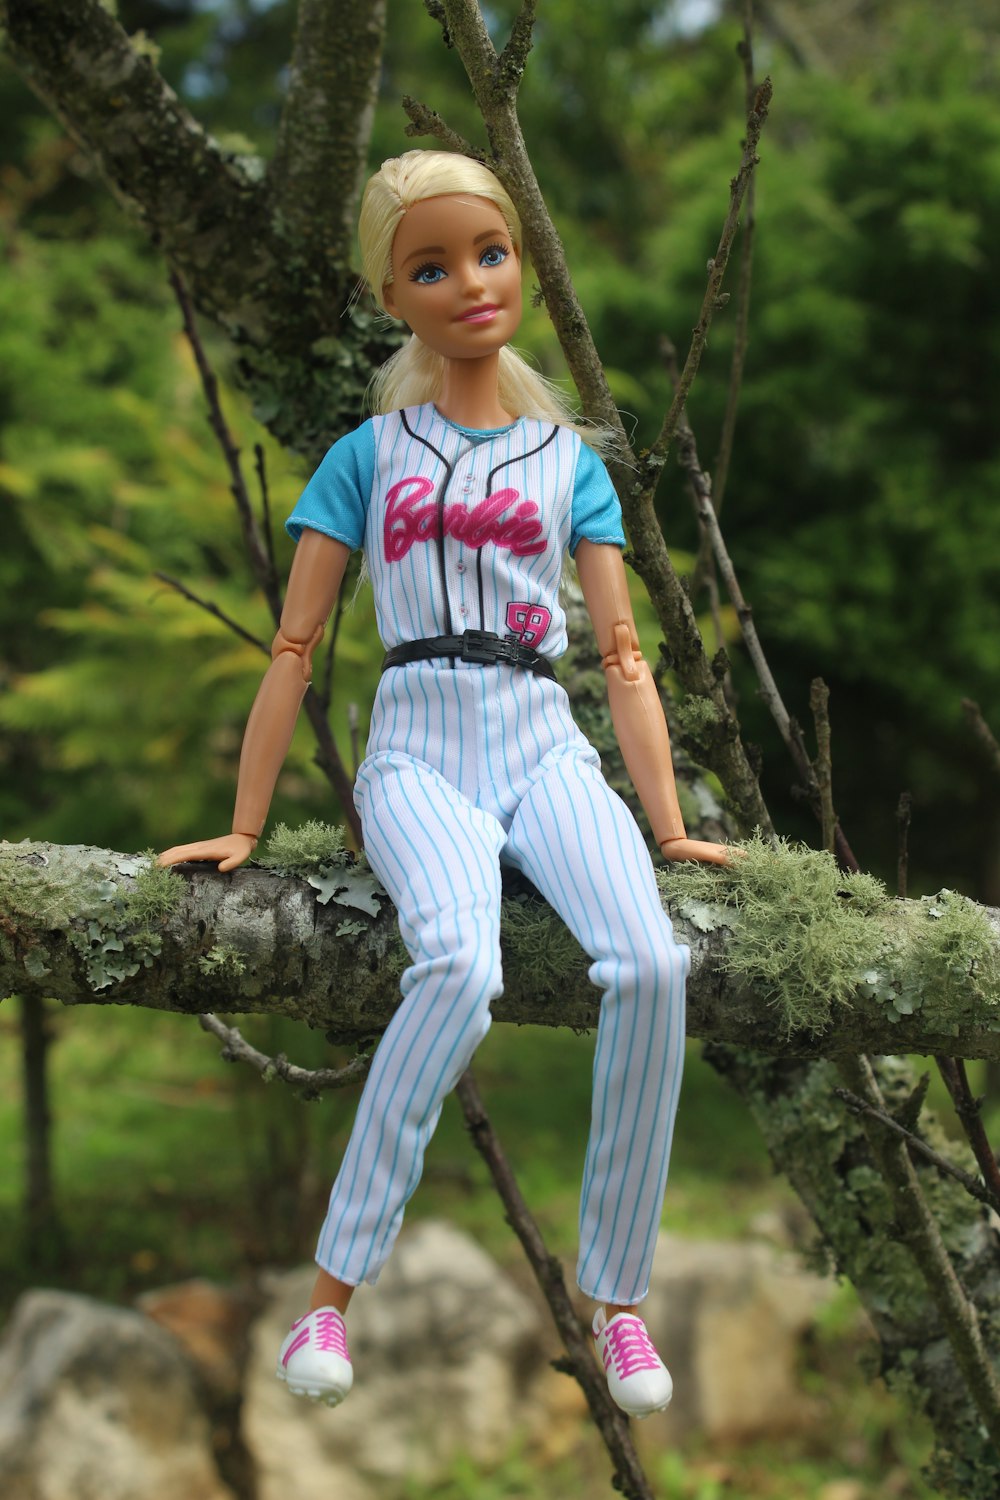 doll wearing baseball jersey sitting on tree branch during daytime photo –  Free Person Image on Unsplash